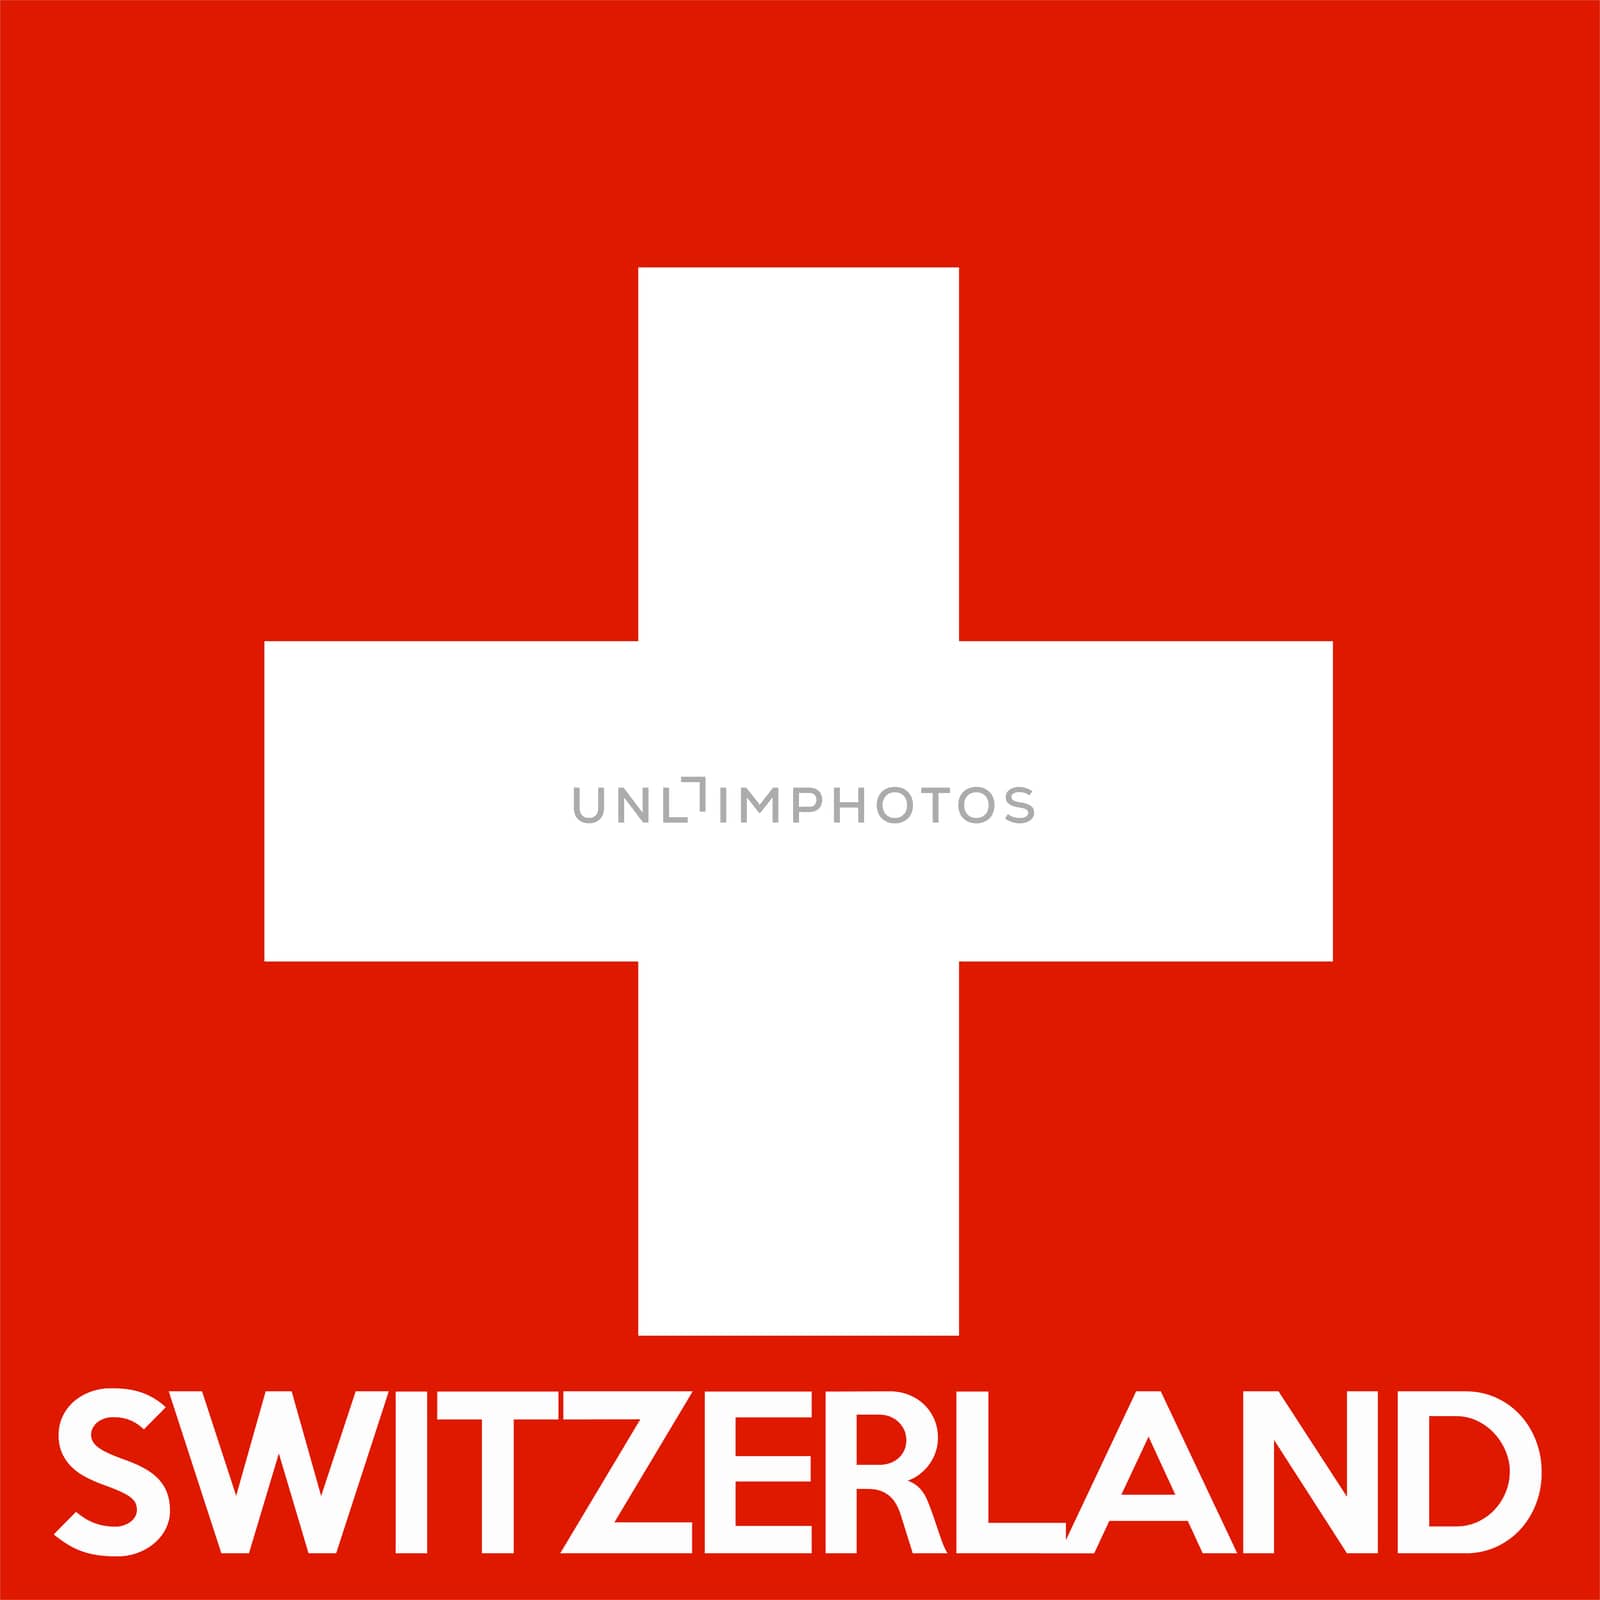 very big size illustration country flag of Switzerland